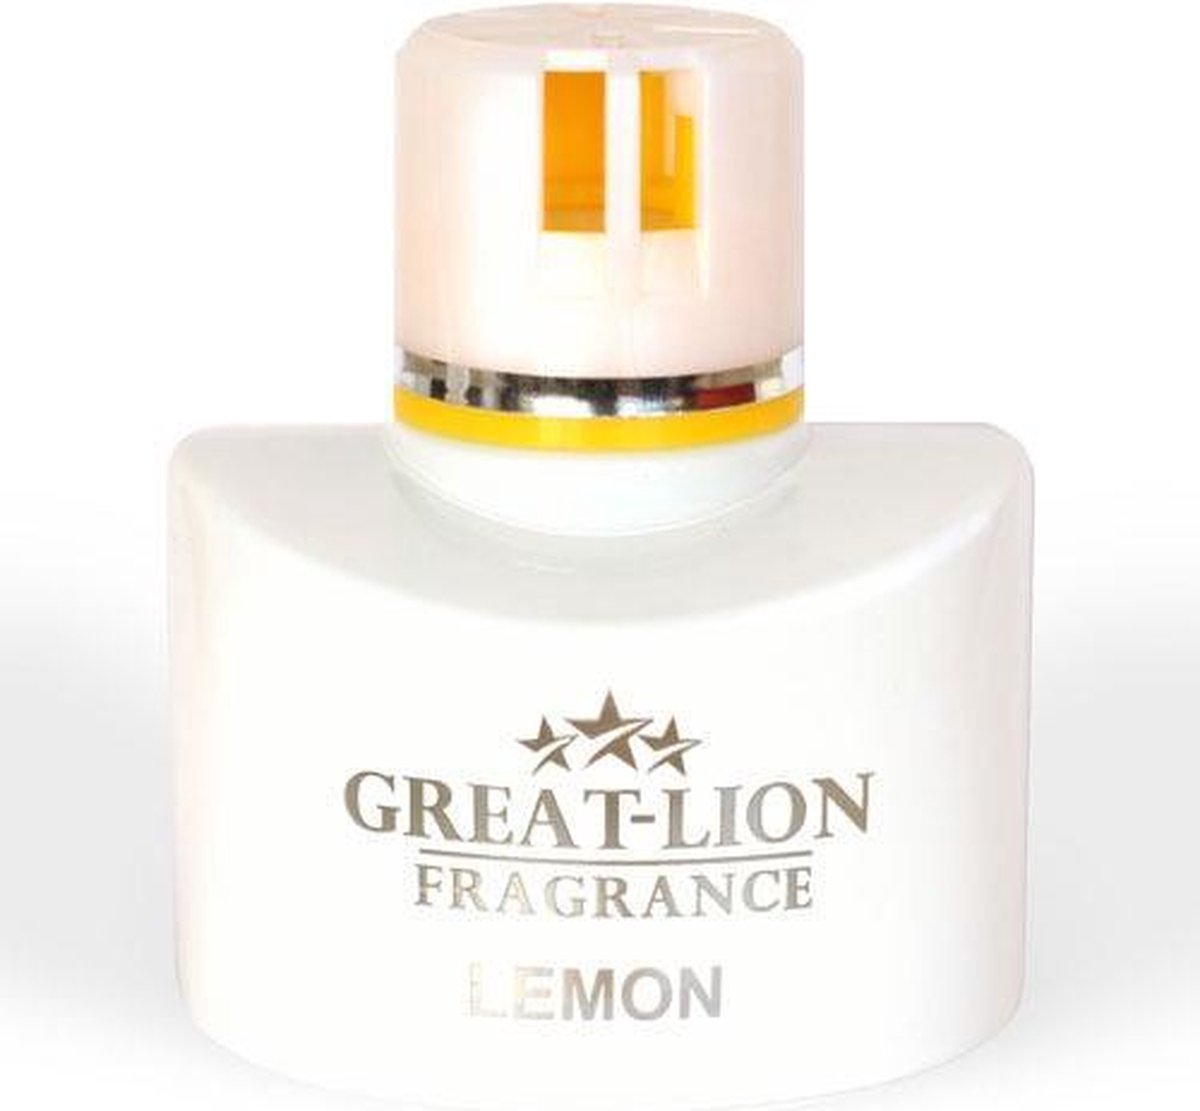 Great-Lion Car Fragrance Lemon